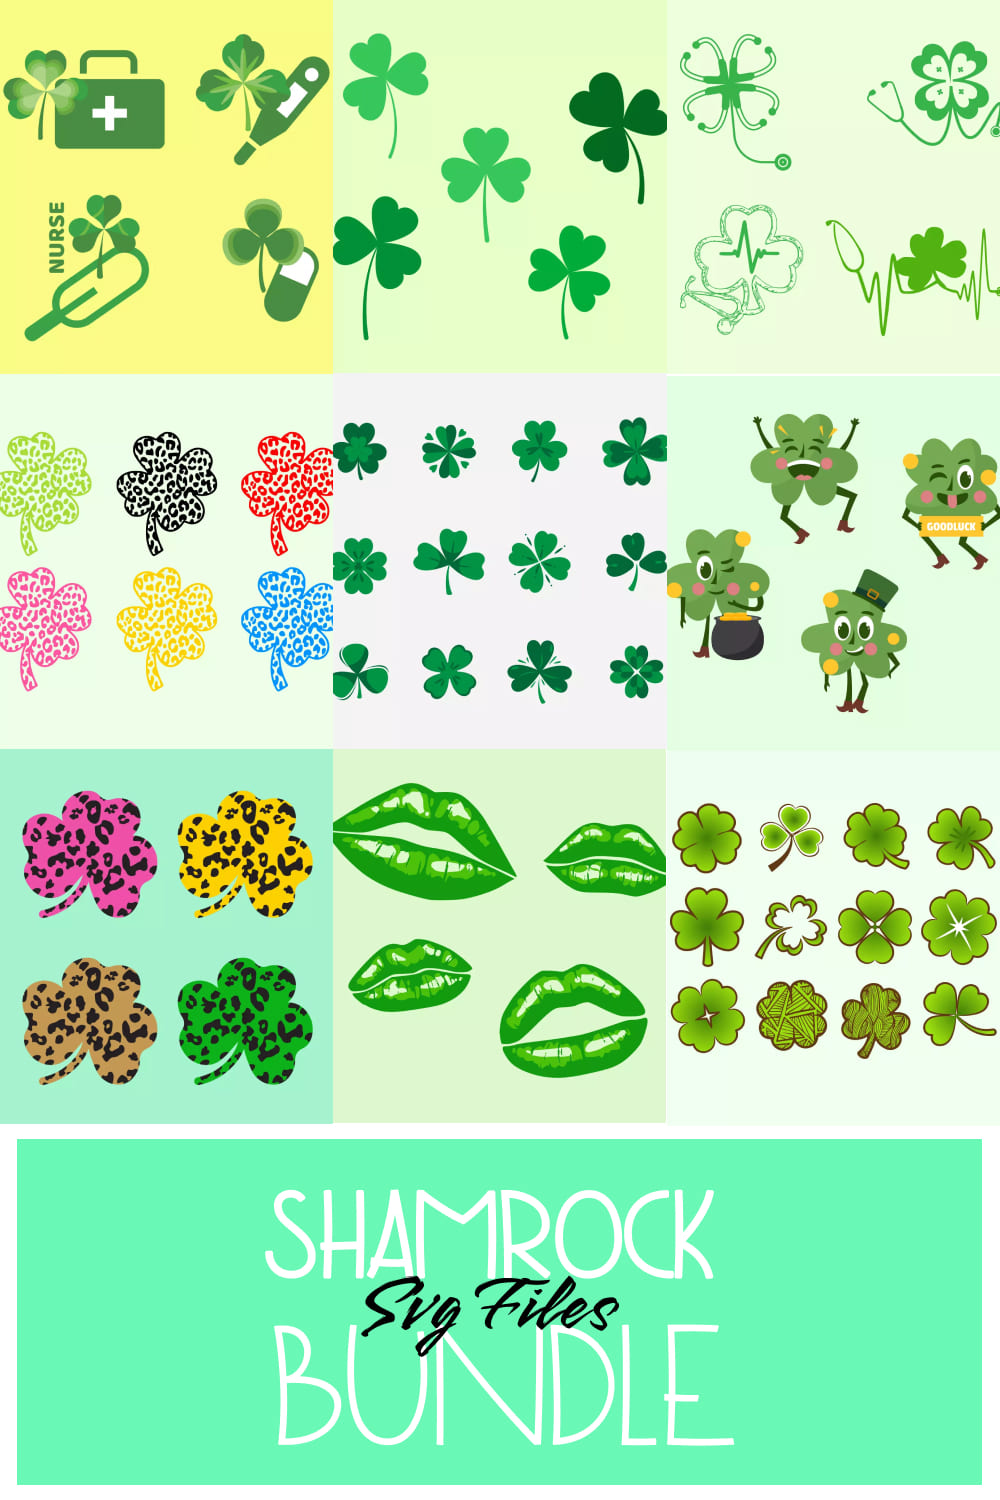 Shamrock SVG Files Bundle - Pinterest.